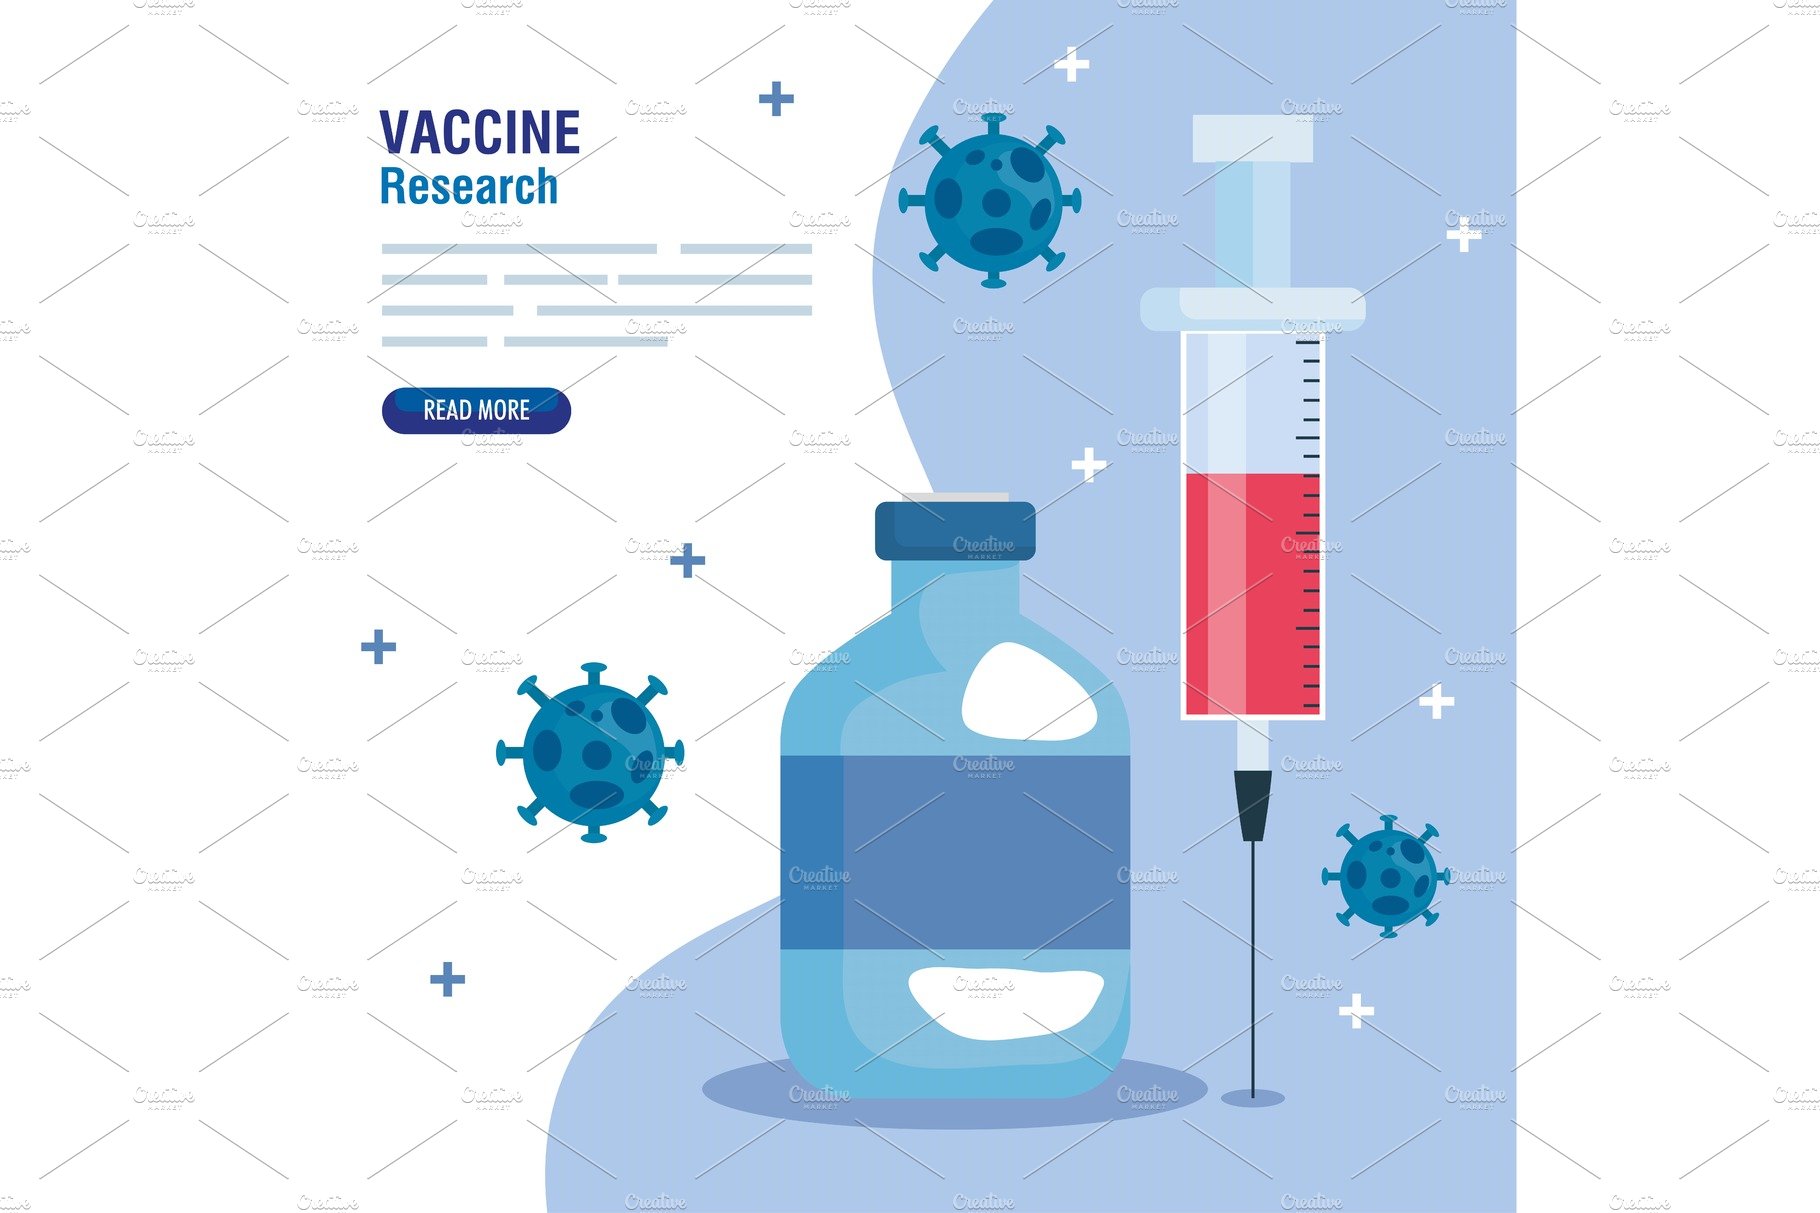 medical vaccine research coronavirus cover image.